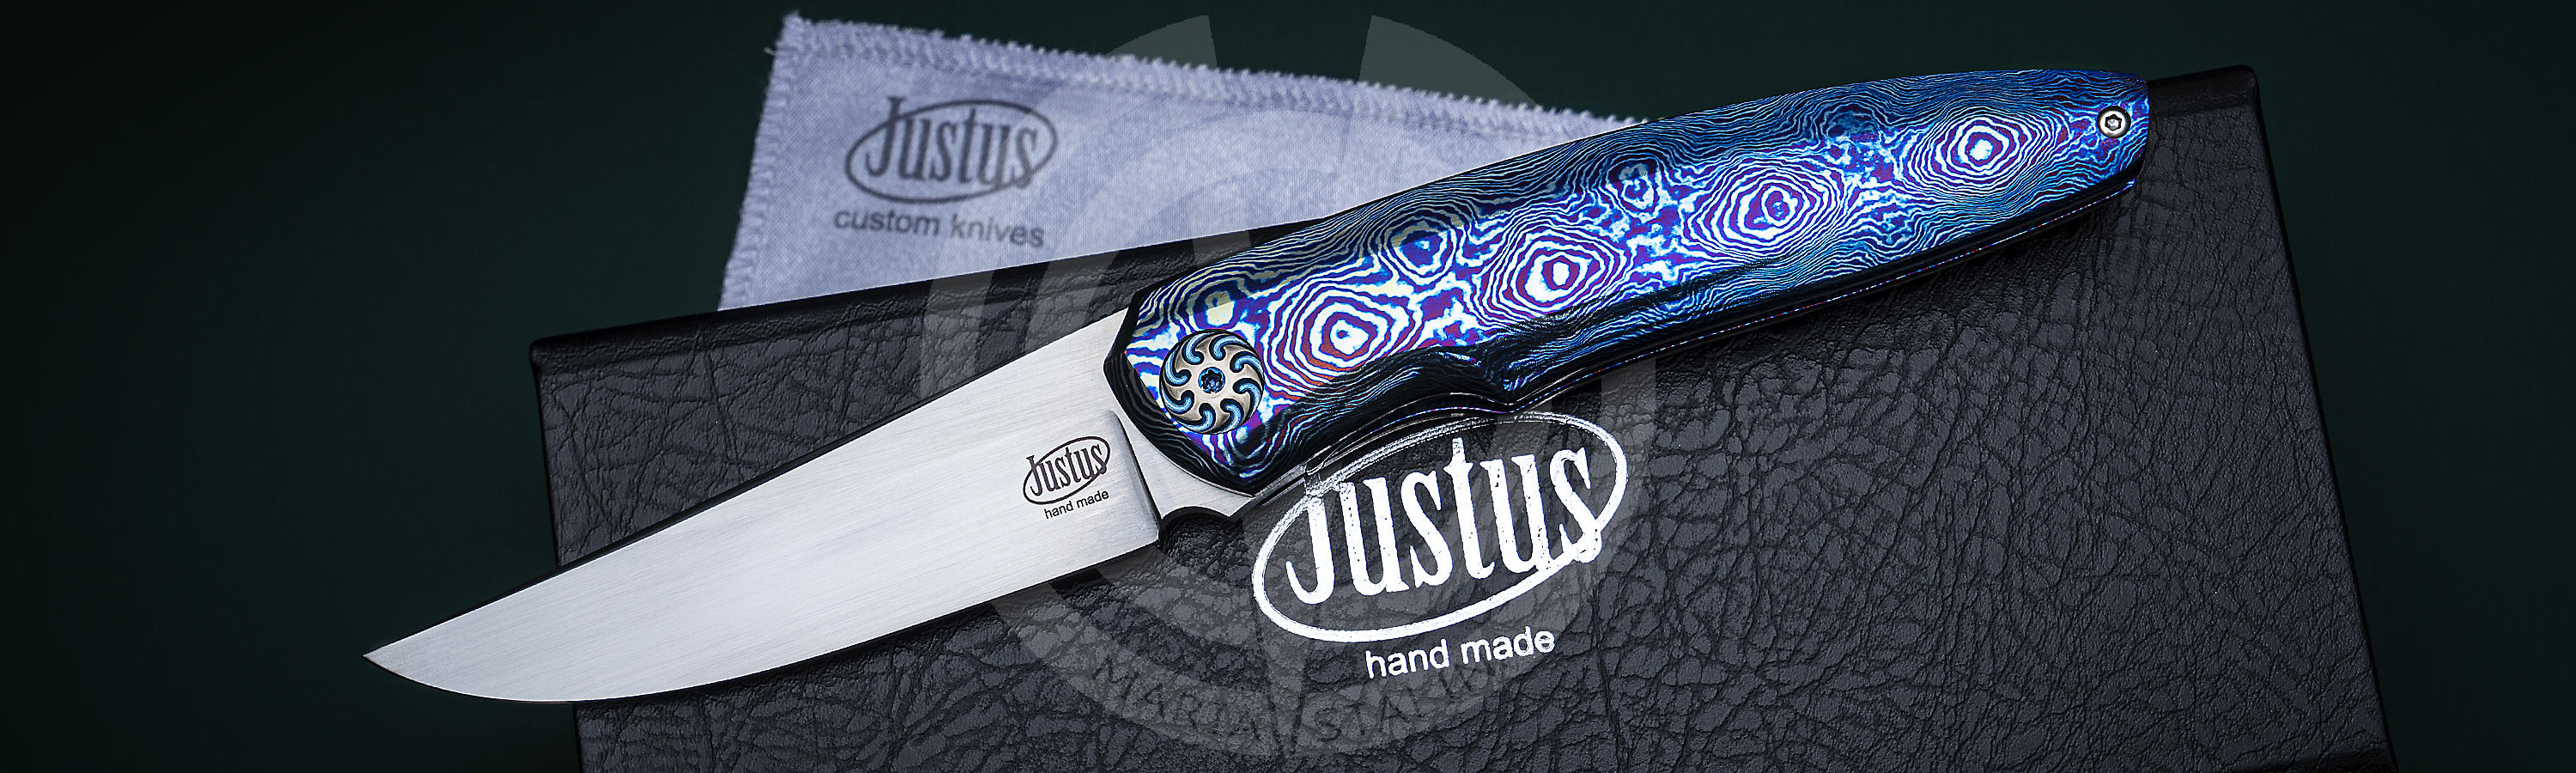 Коллекционный нож Justus Knives